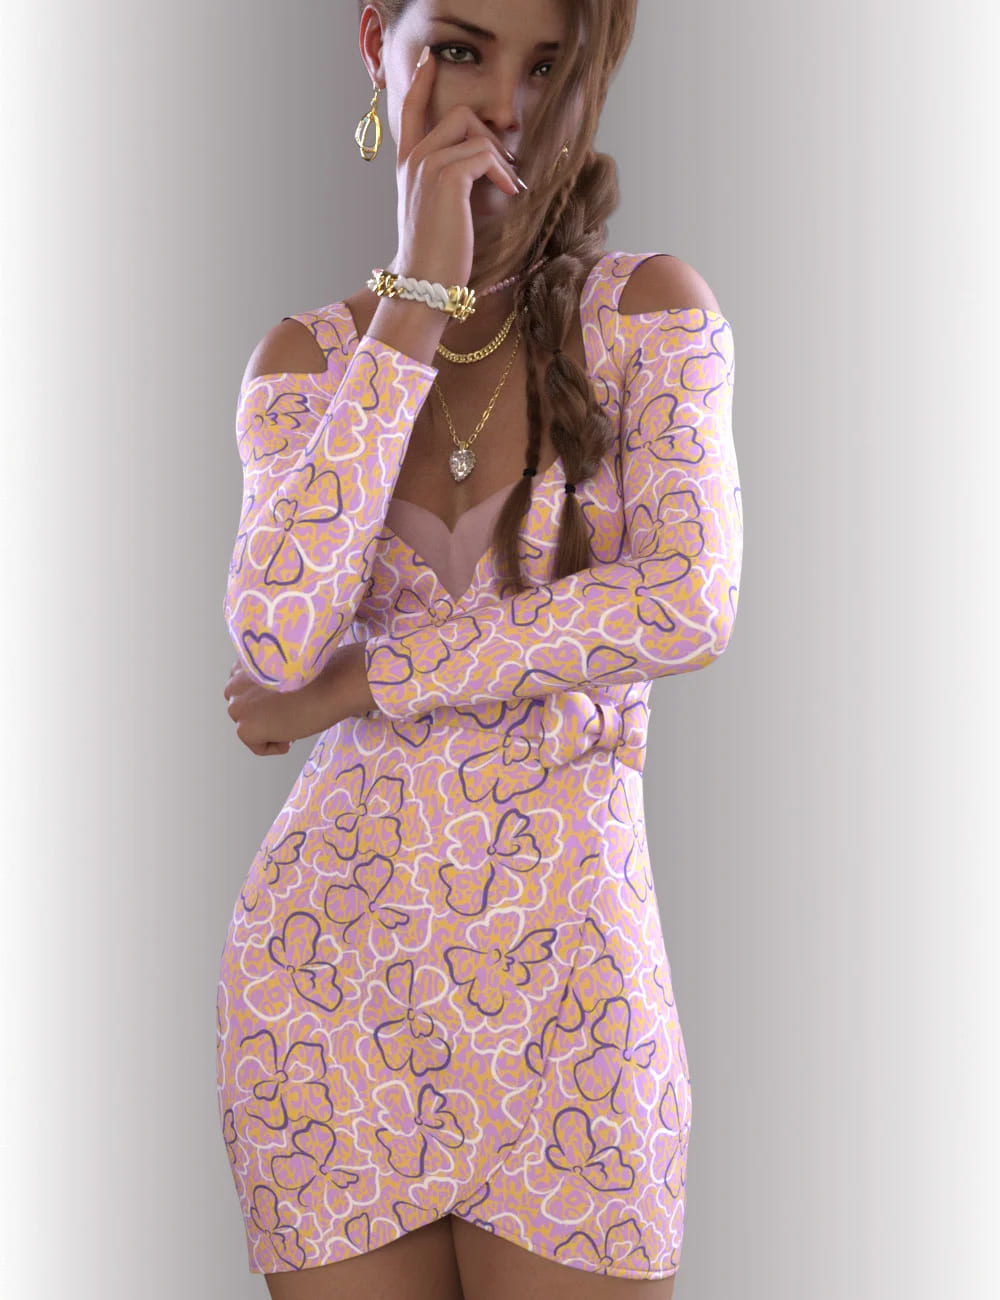 dForce Zoe Outfit for Genesis 8.1 Females_DAZ3DDL